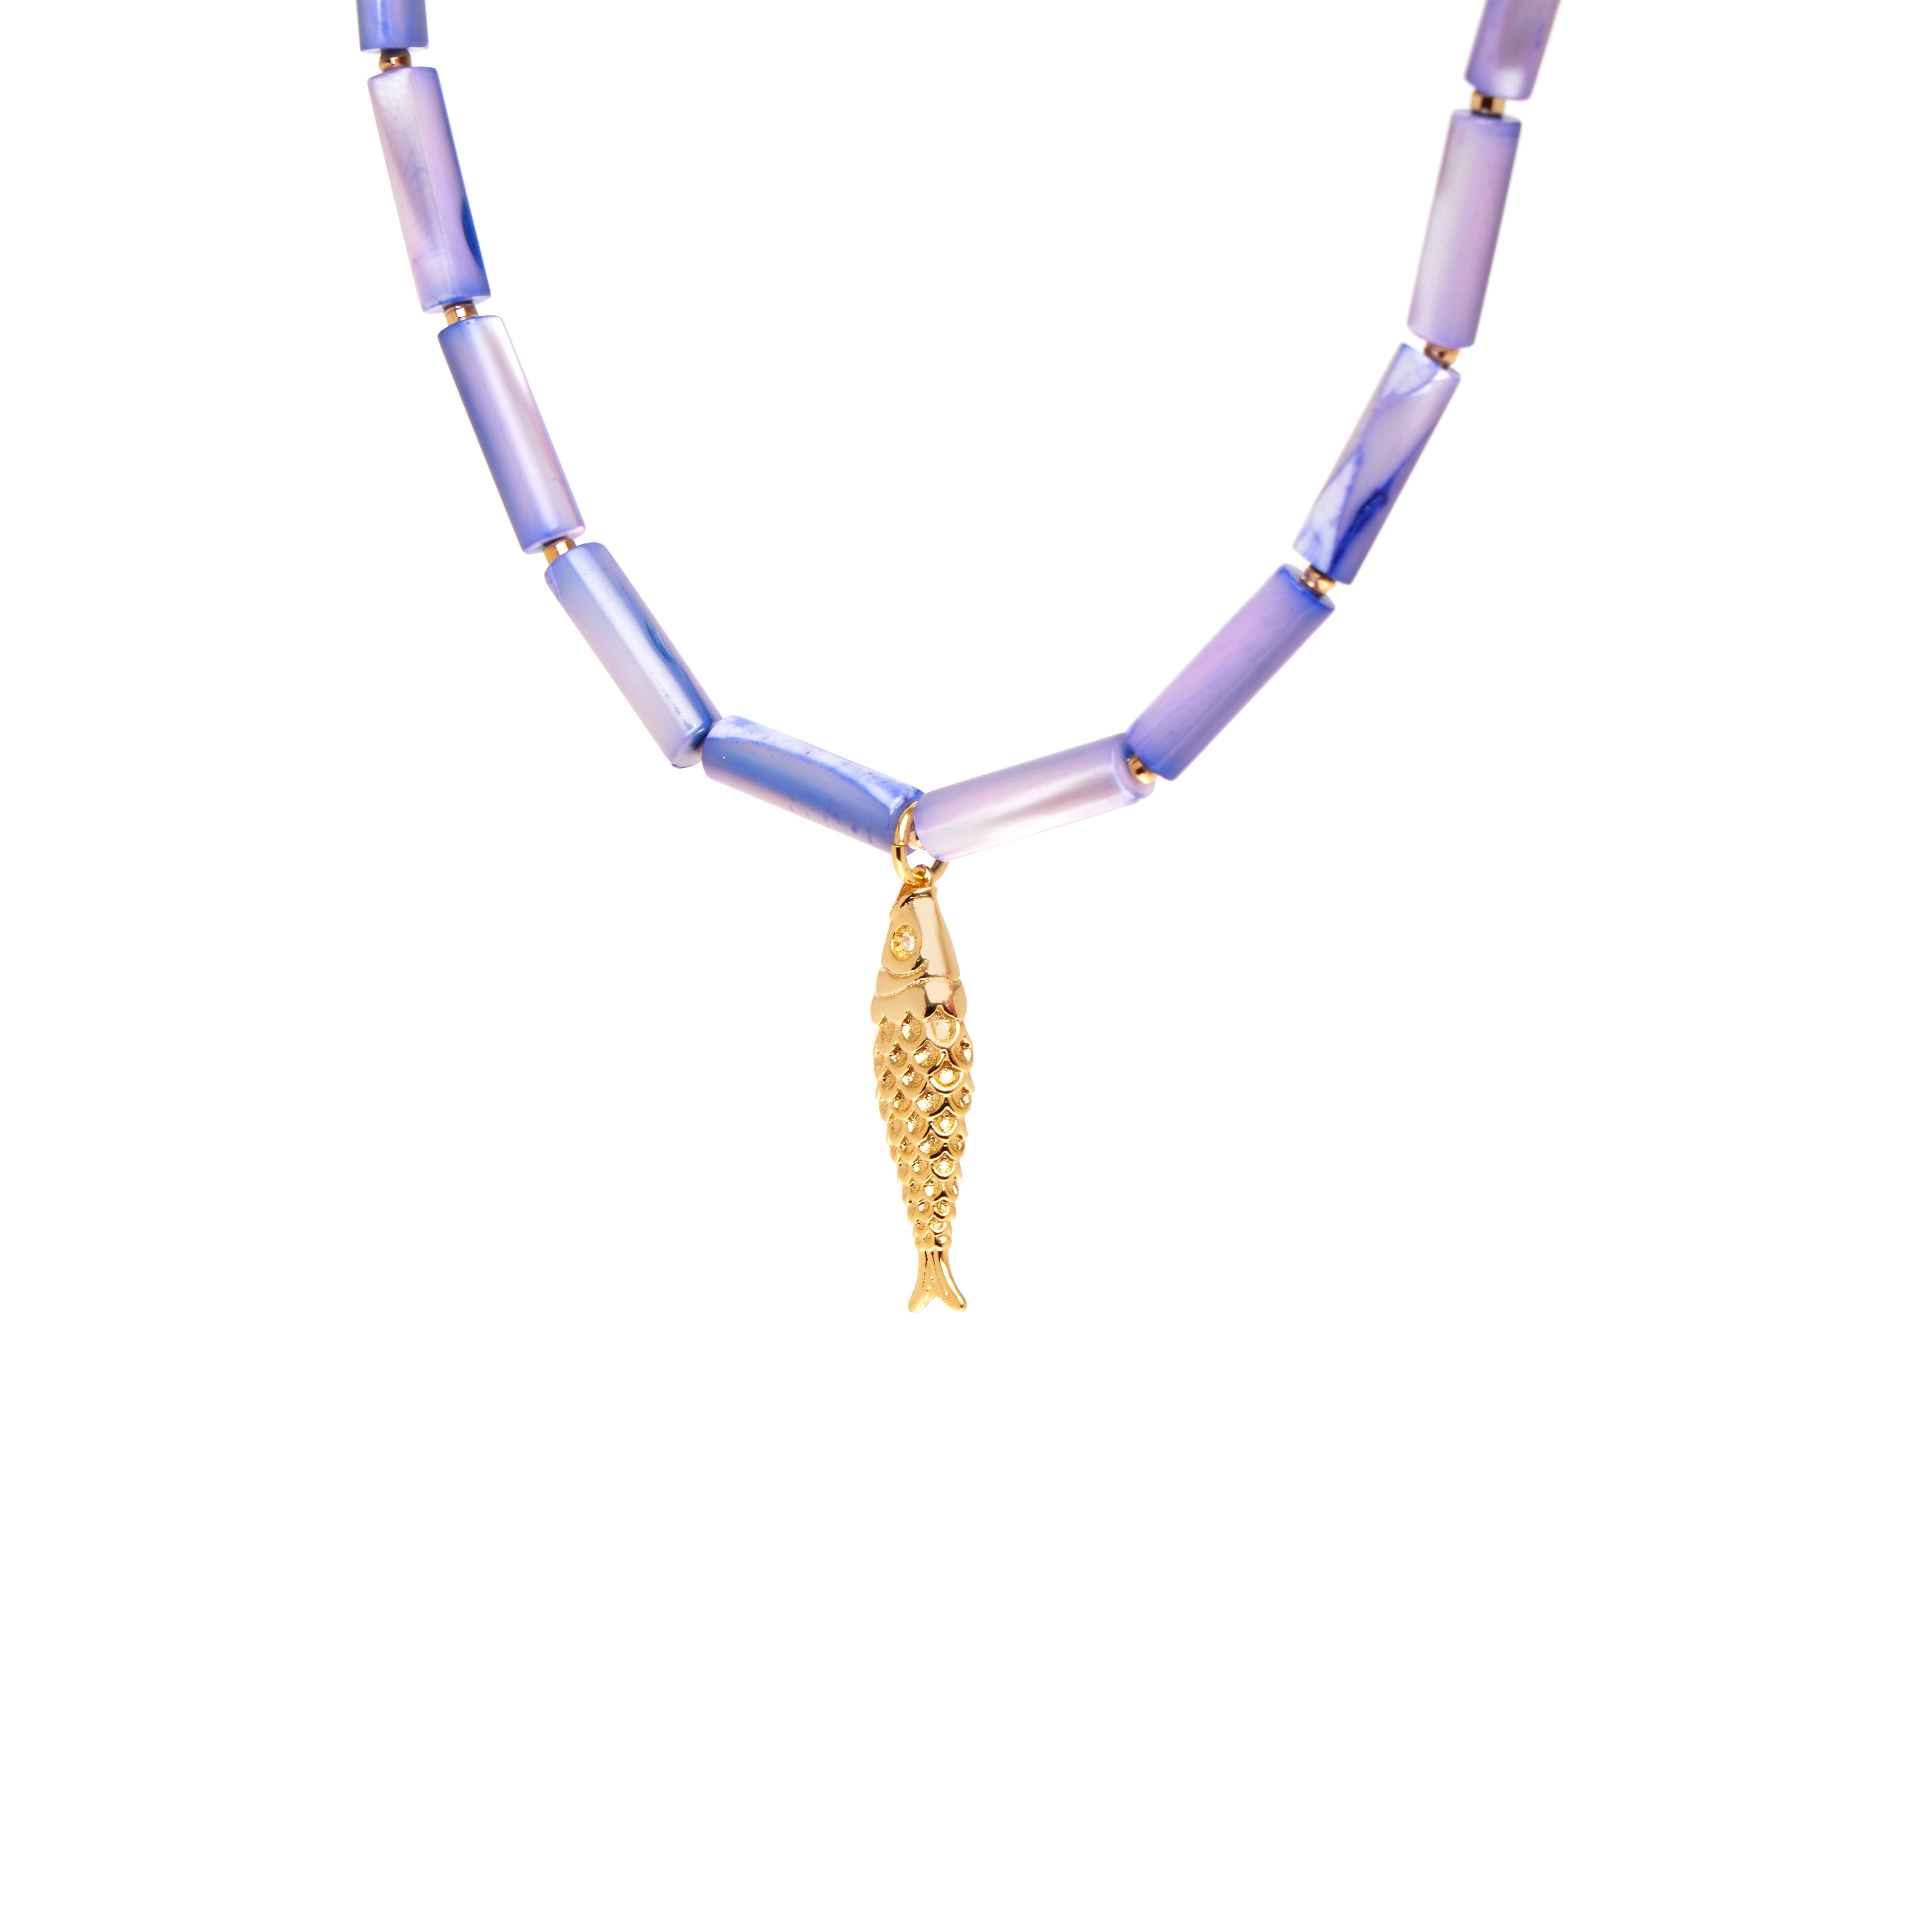 HOLLY JUNE Колье Gold Fish Tube Necklace - Violet колье holly june gold saturn necklace 1 шт